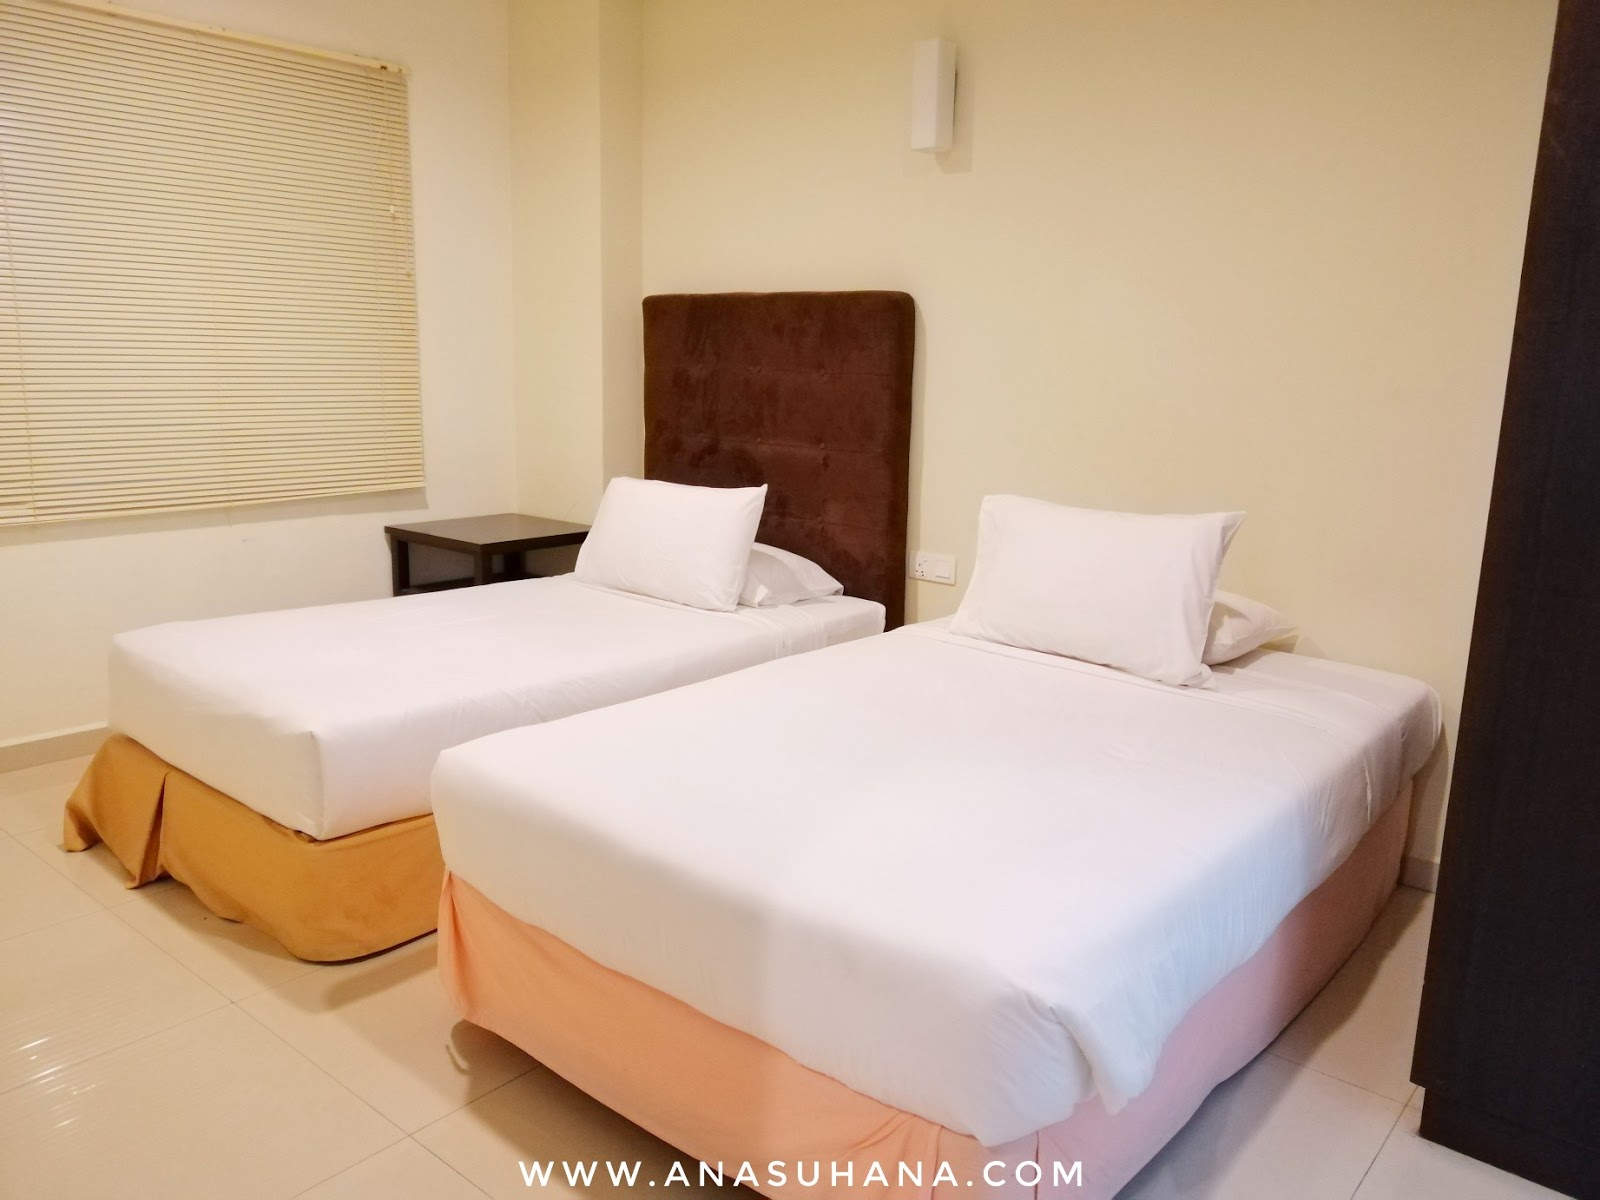 Marina Island Pangkor Resort & Hotel